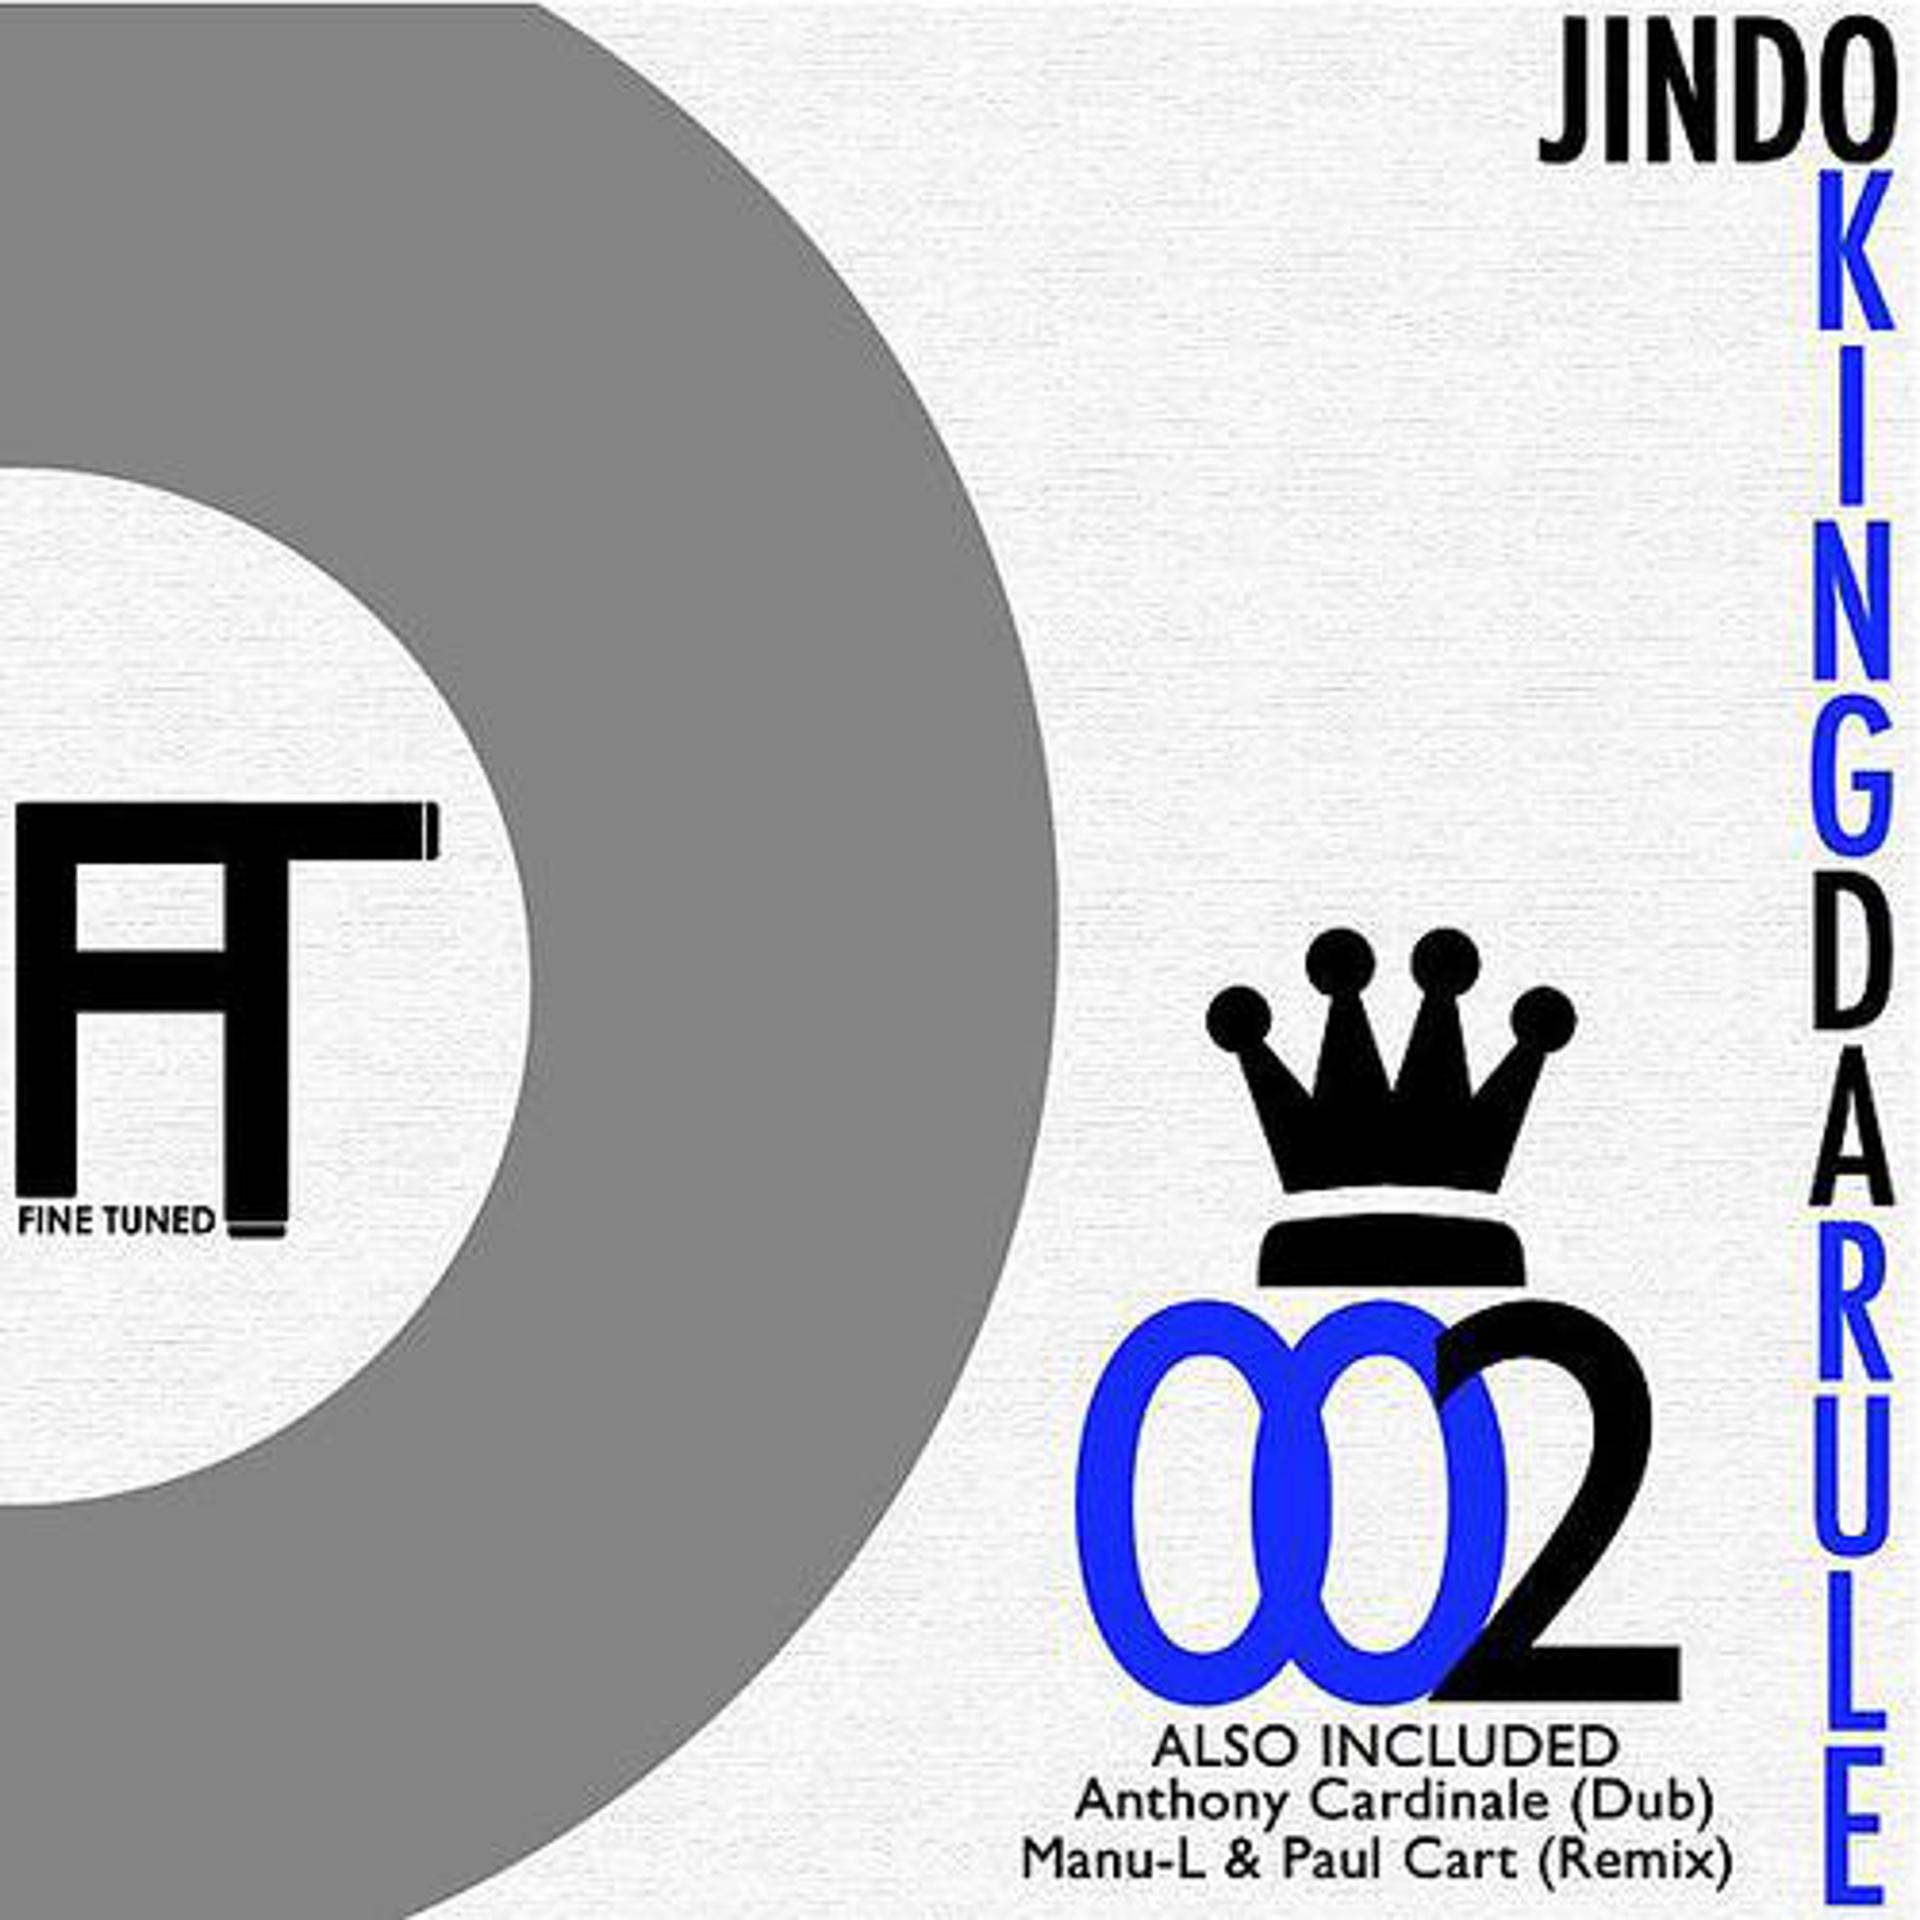 Постер альбома King Da Rule